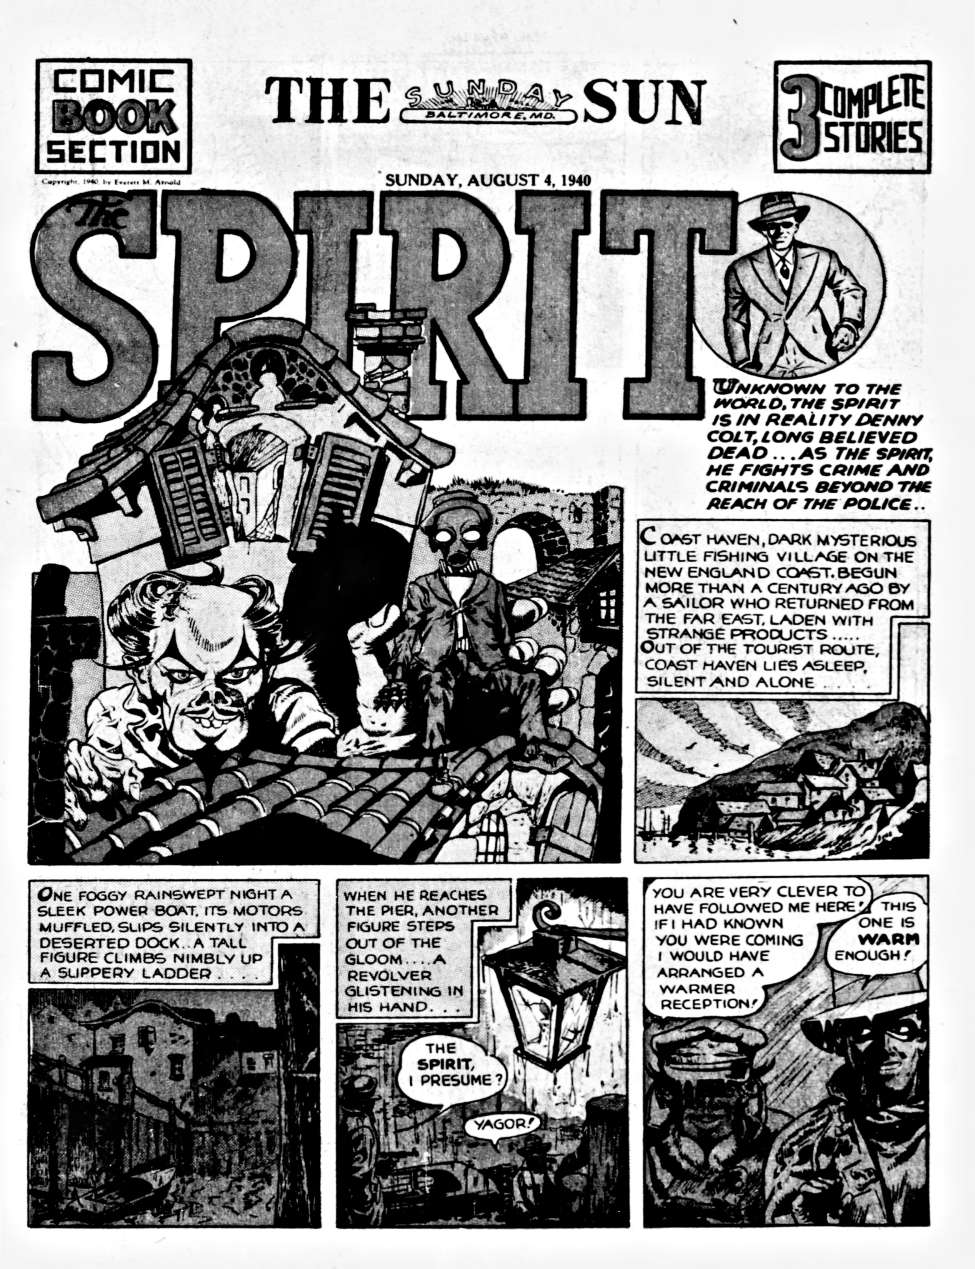 Book Cover For The Spirit (1940-08-04) - Baltimore Sun (b/w)